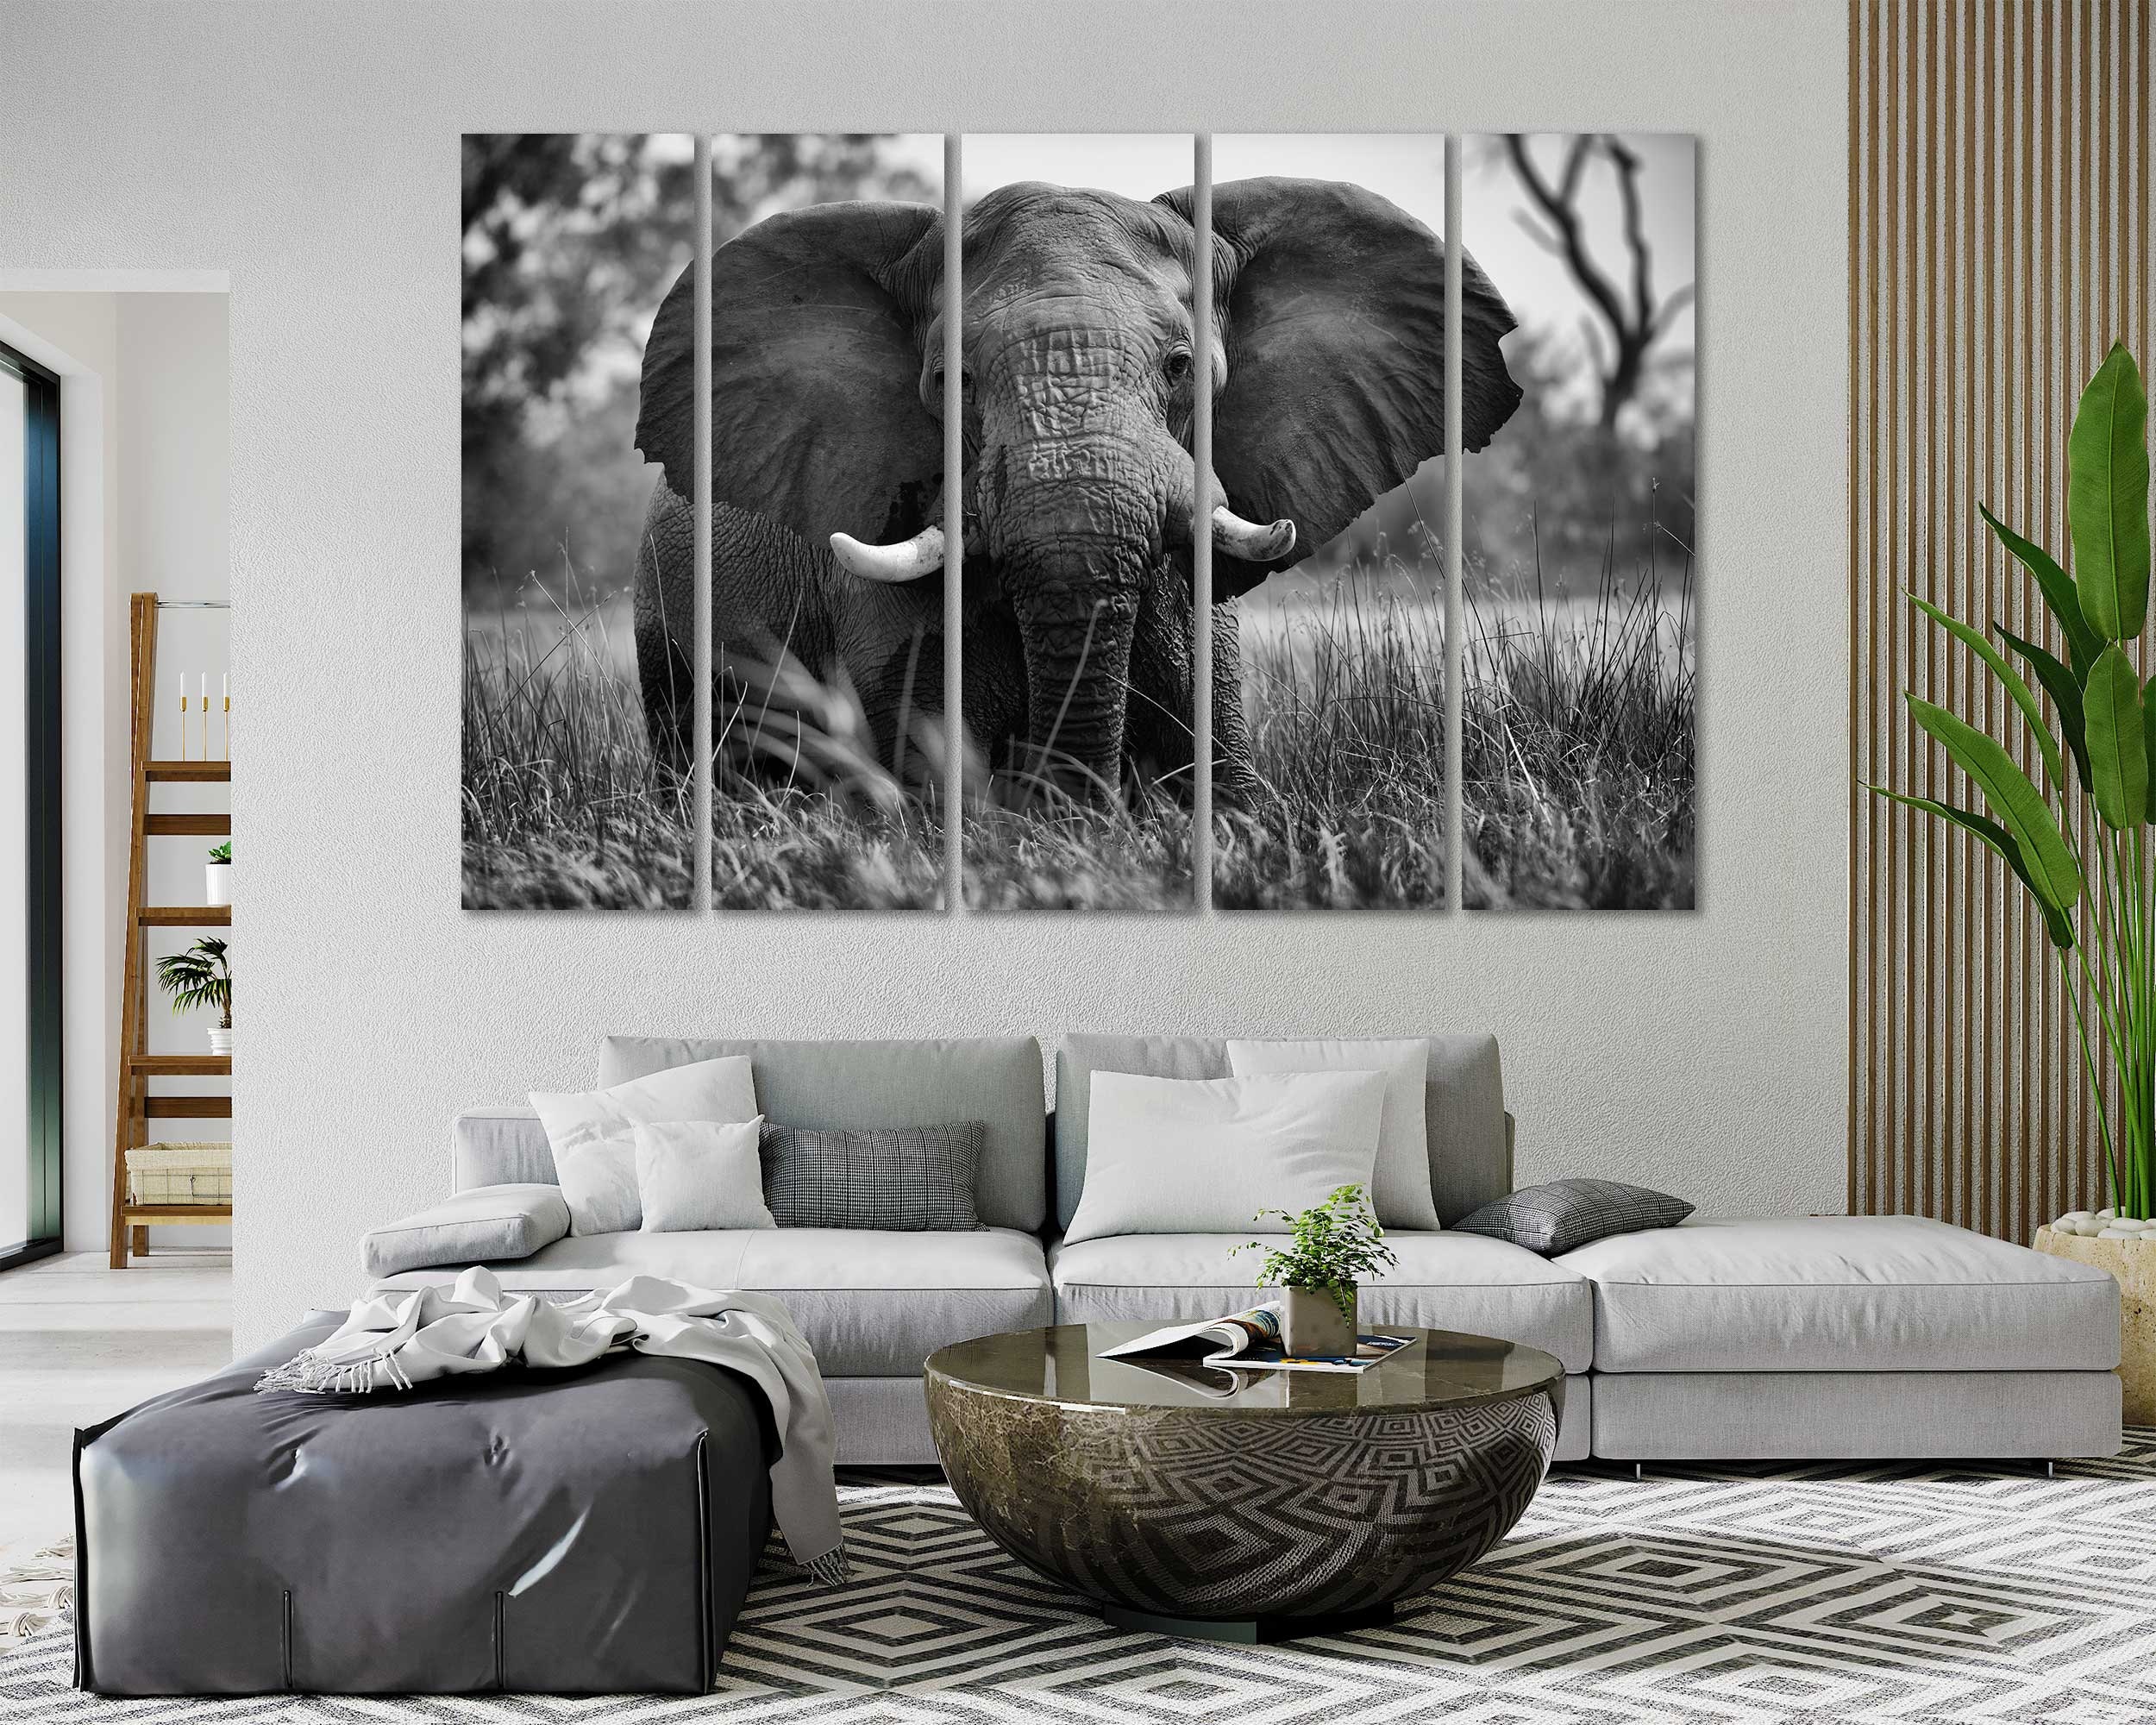 Elephant Figurine Decor Ideas: 10 Ways To Use Elephant In Your Home